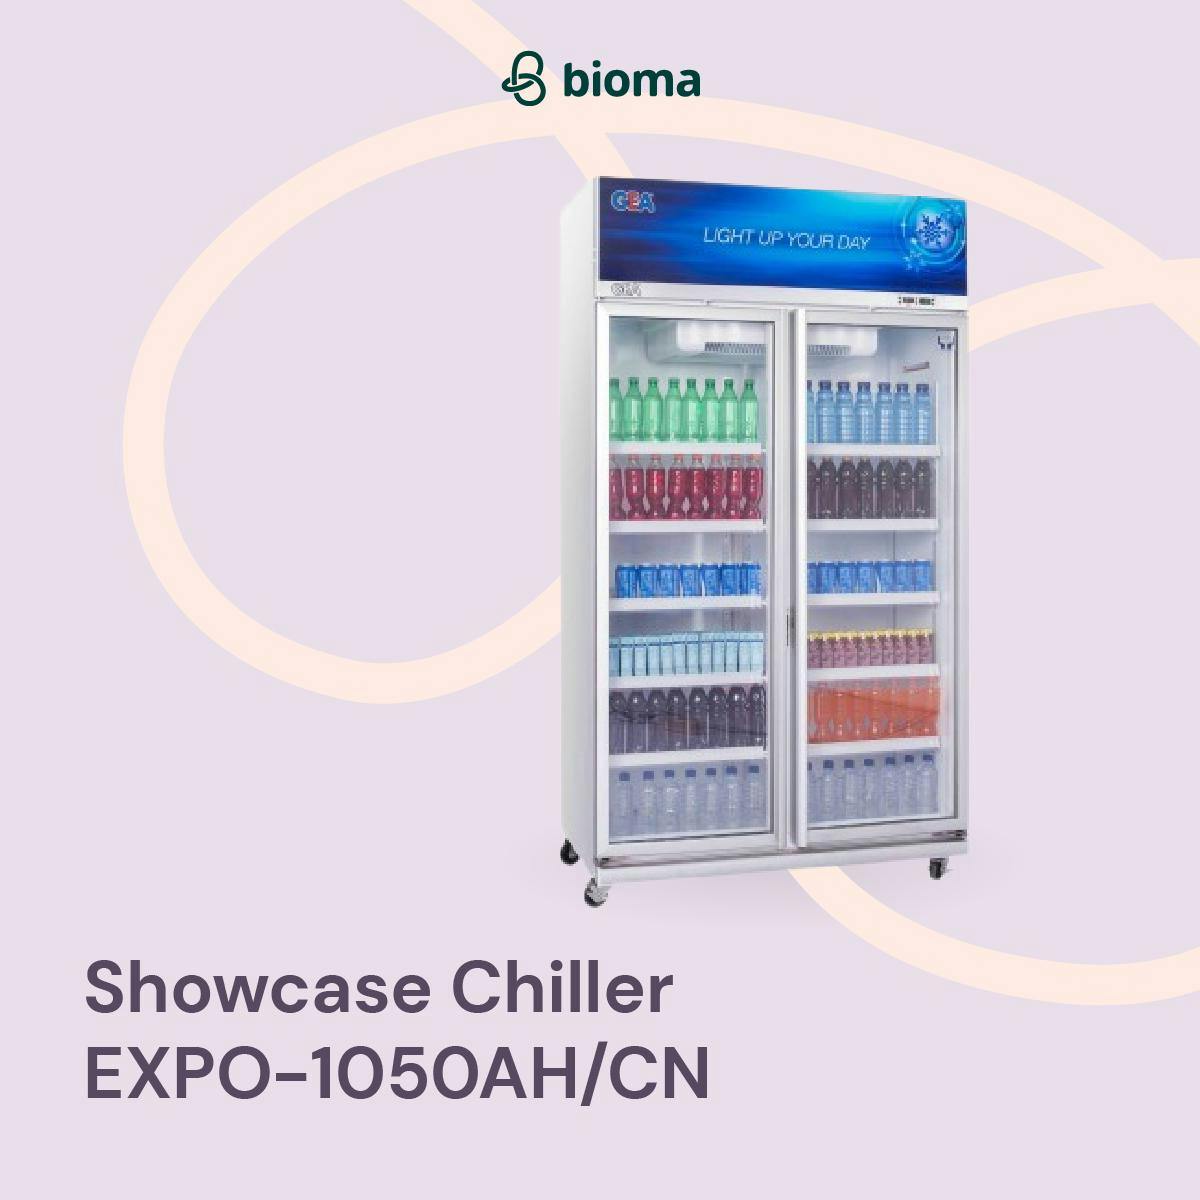 Showcase Chiller EXPO-1050AH/CN